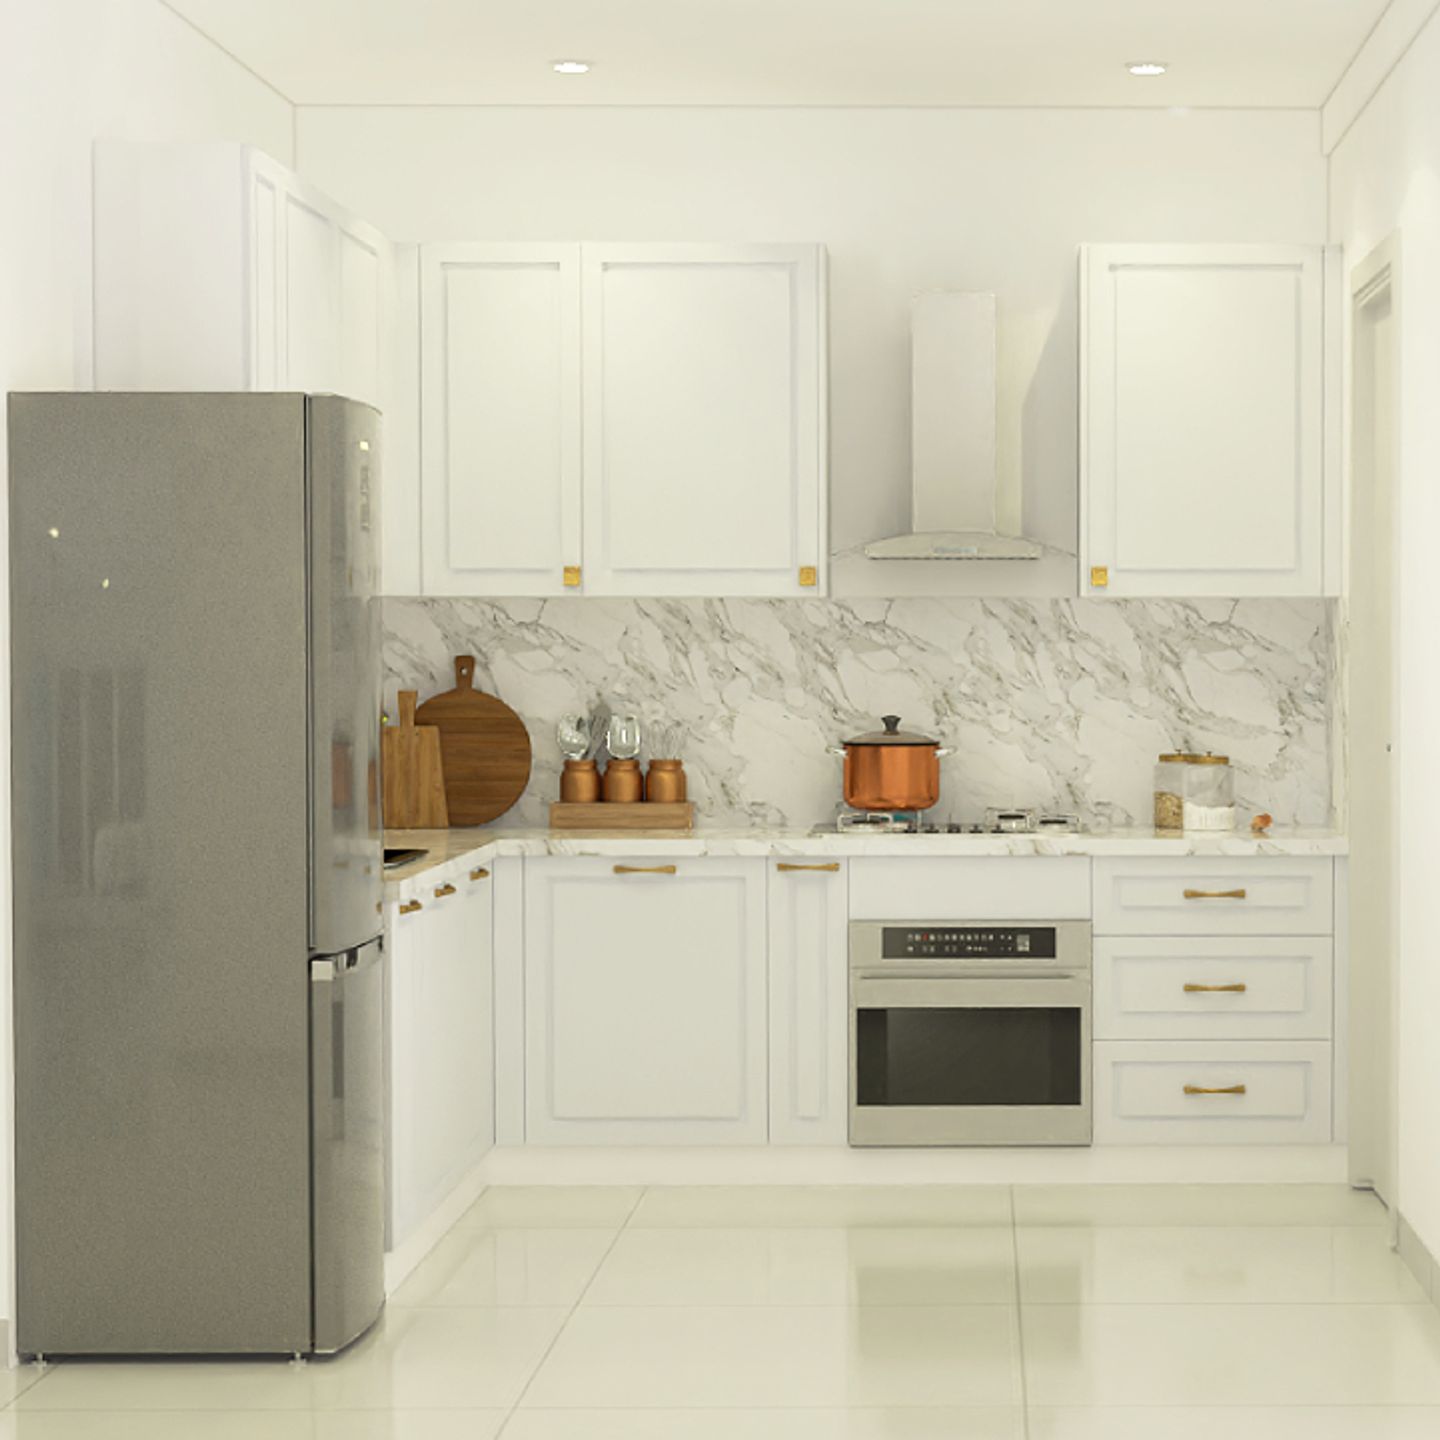 8X7 Ft L-Shaped Kitchen Design With Shutter Storage - Livspace